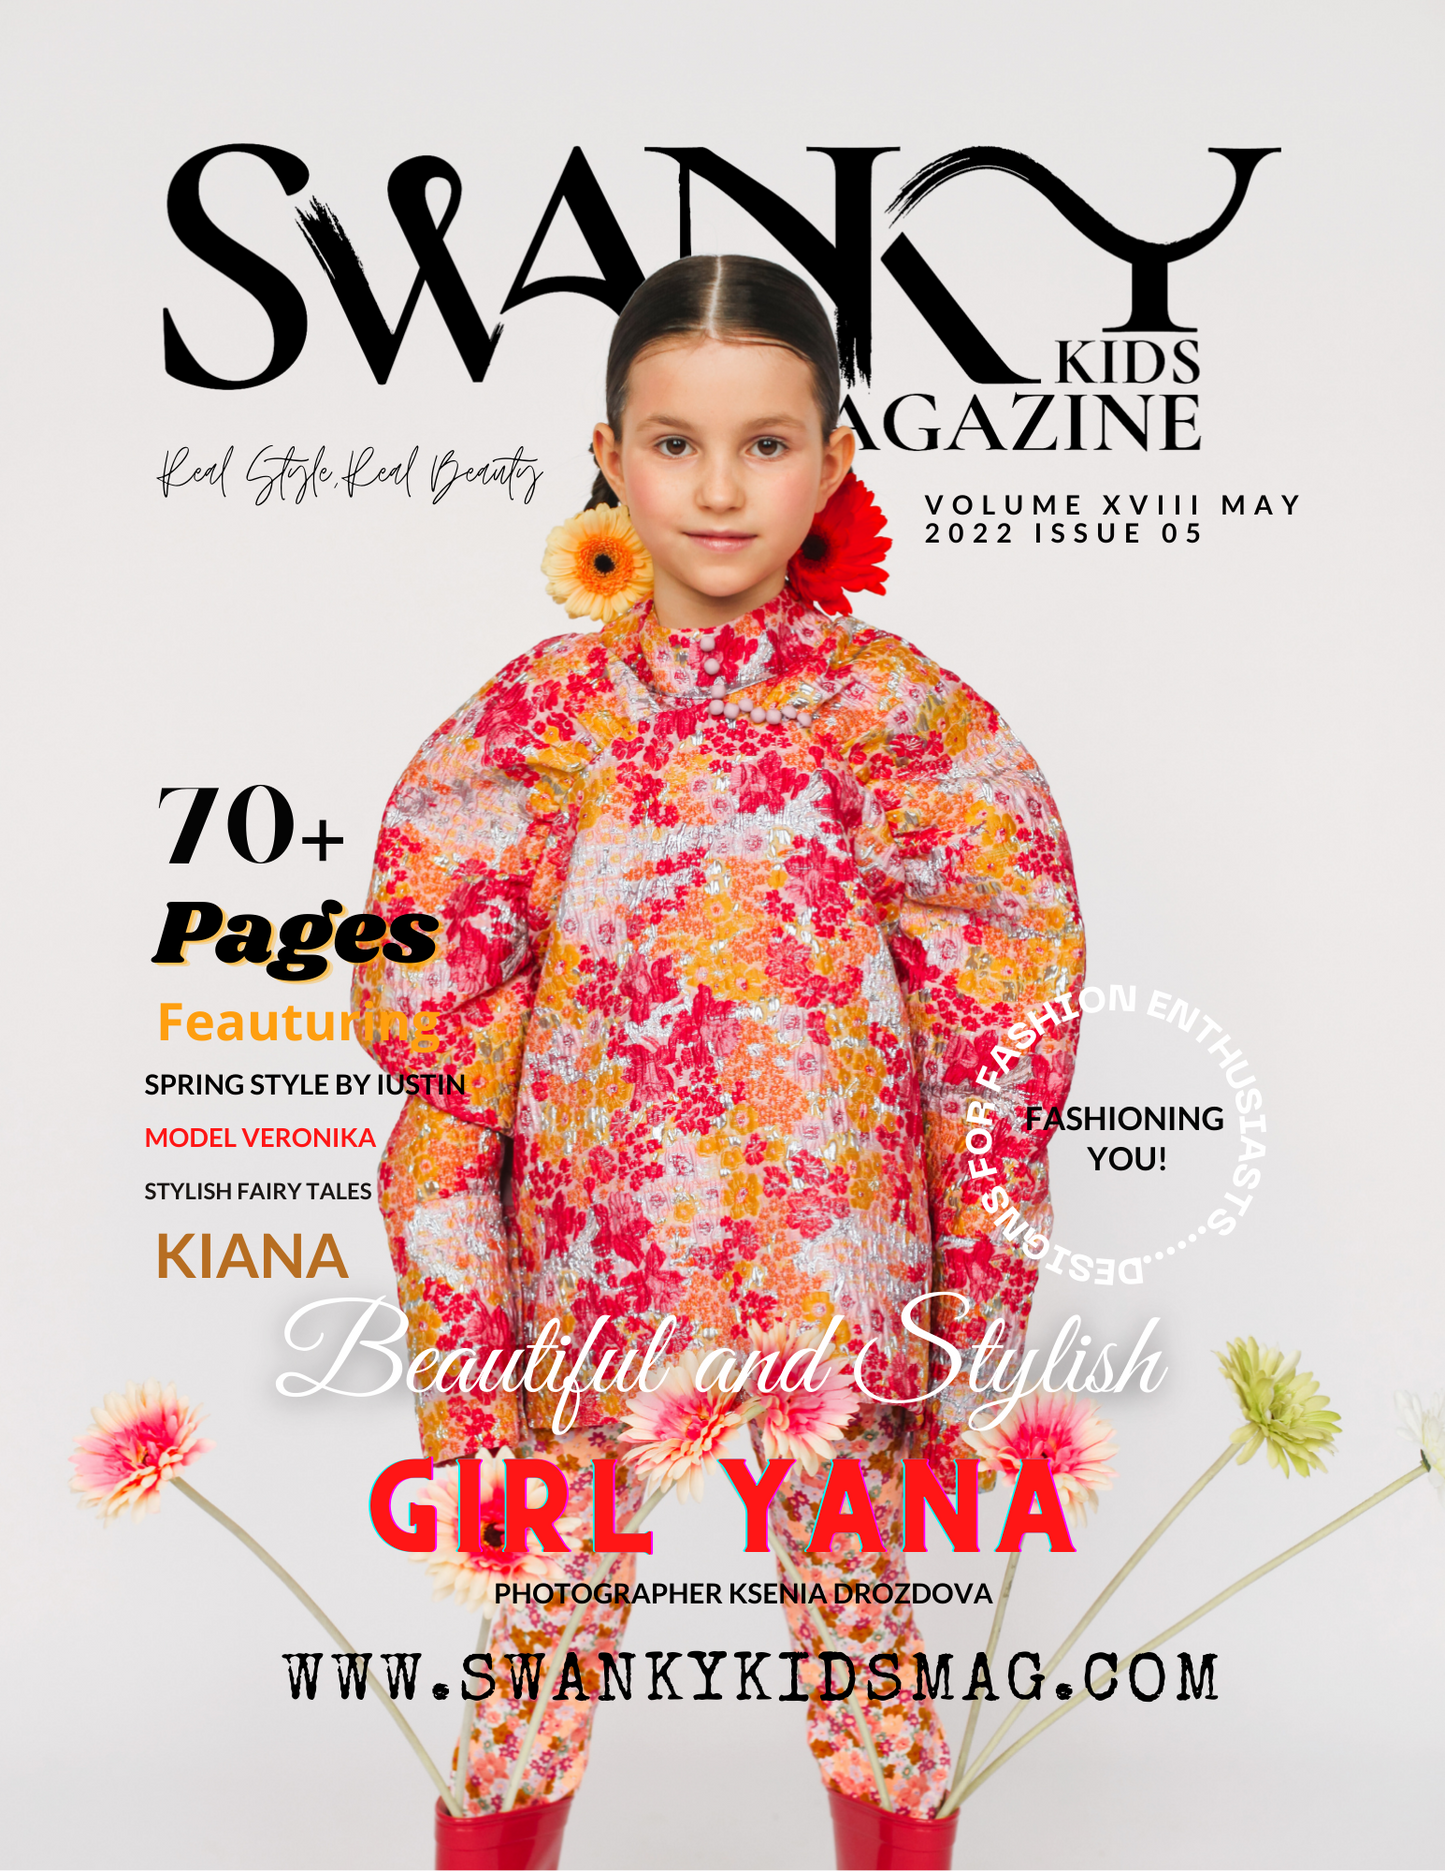 Swanky Kids Magazine MAY 2022 VOL XVIII Issue 5